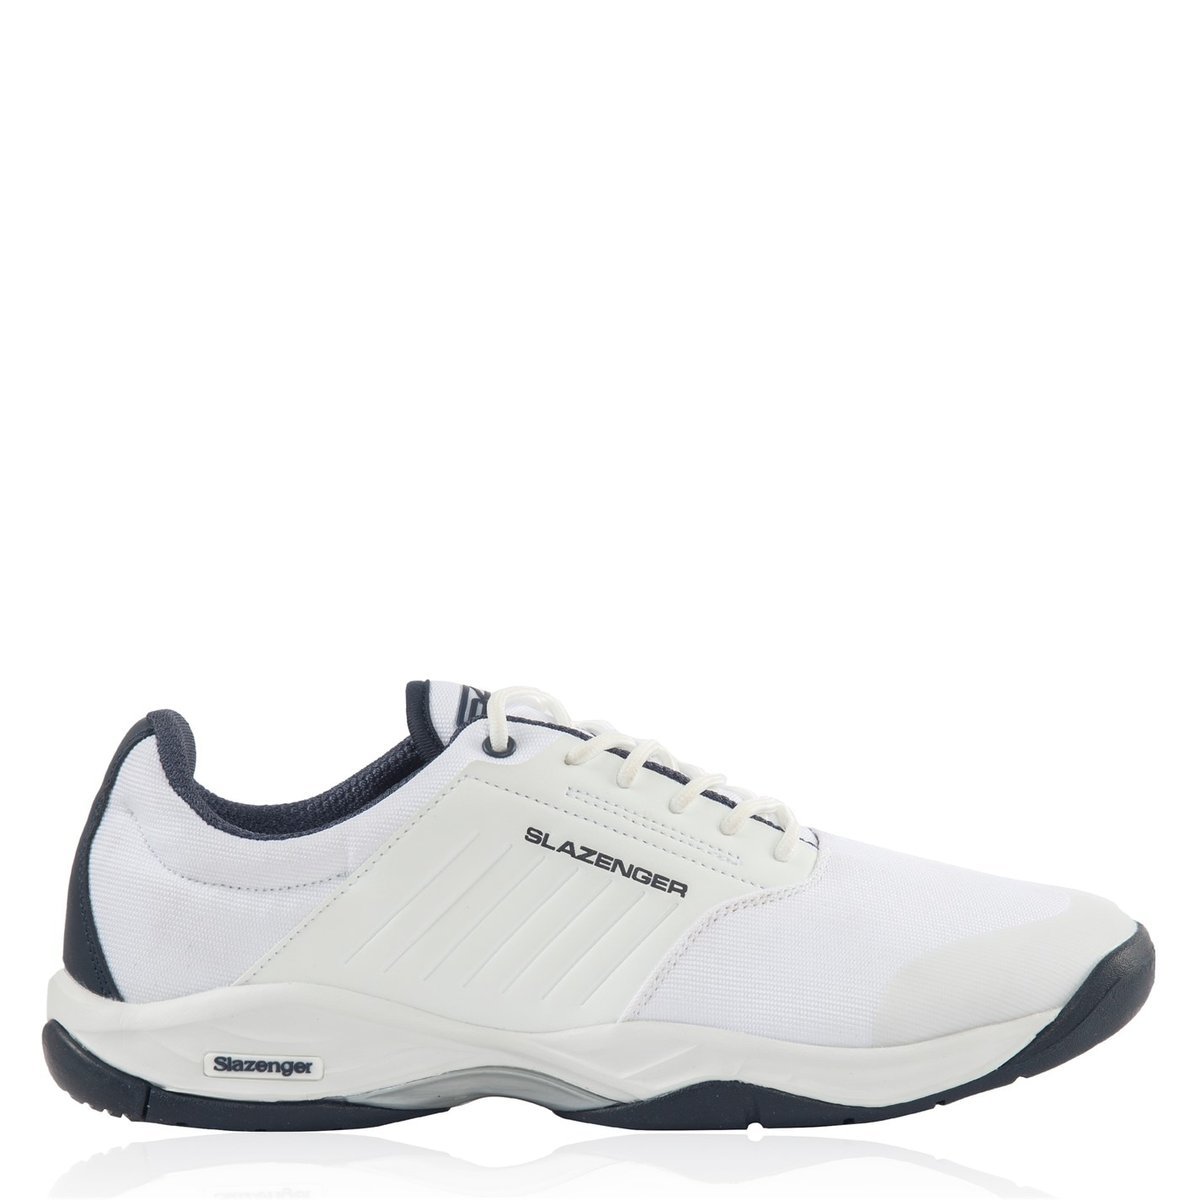 Slazenger SZR Pro Mens Tennis Shoes White/Fluo, £50.00